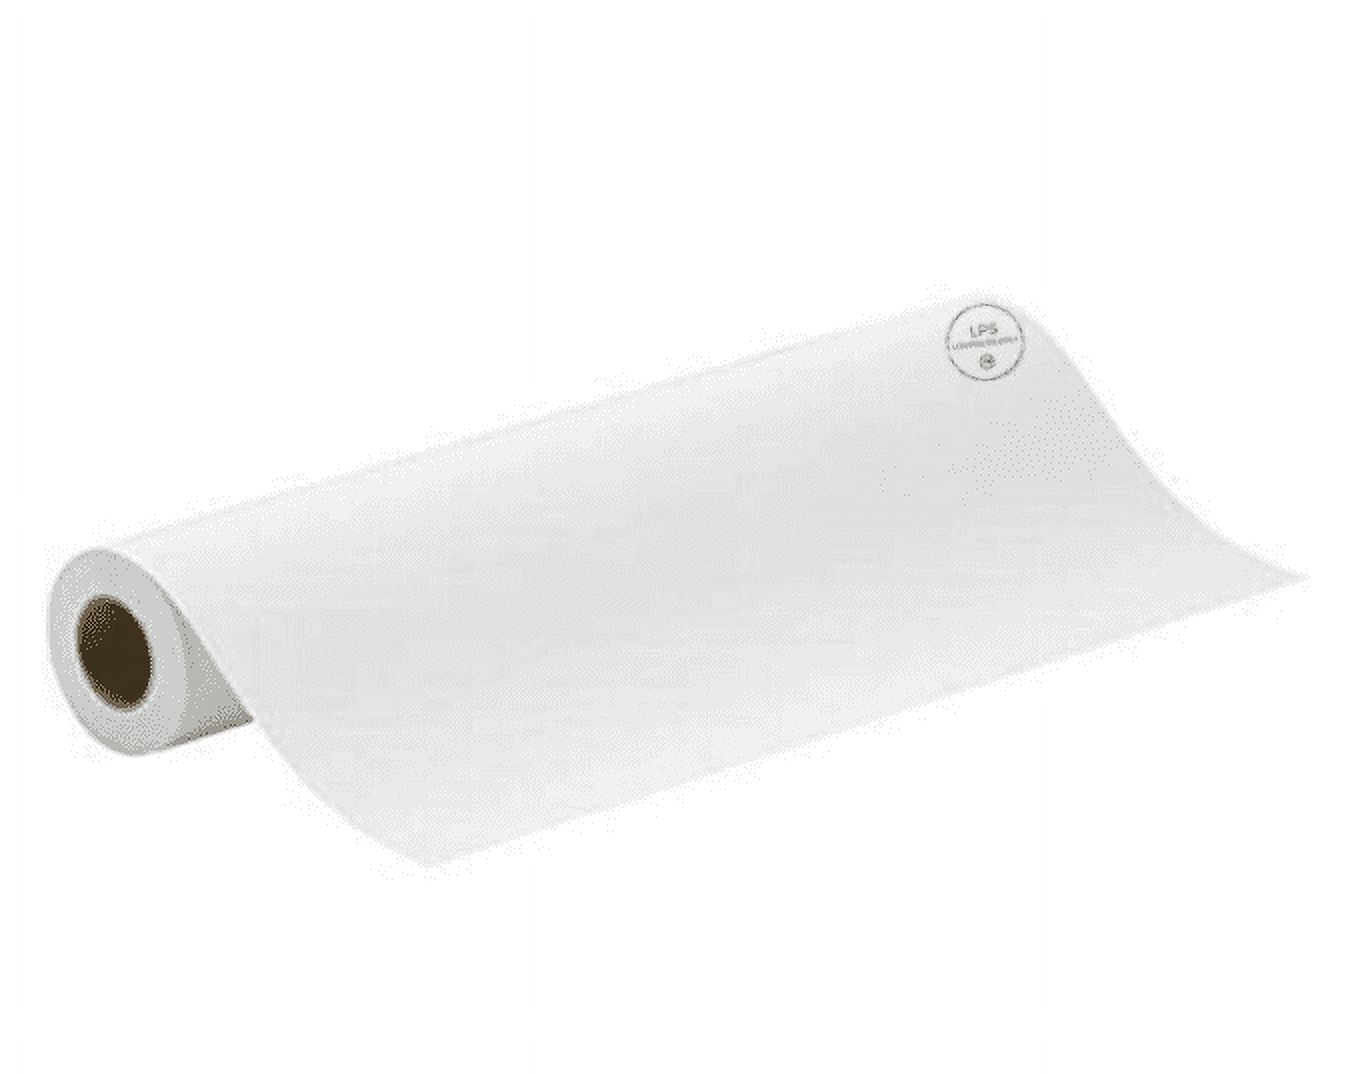 Nova 18x1000' White Butcher Paper Roll - 40# Basis Weight, 1 Roll